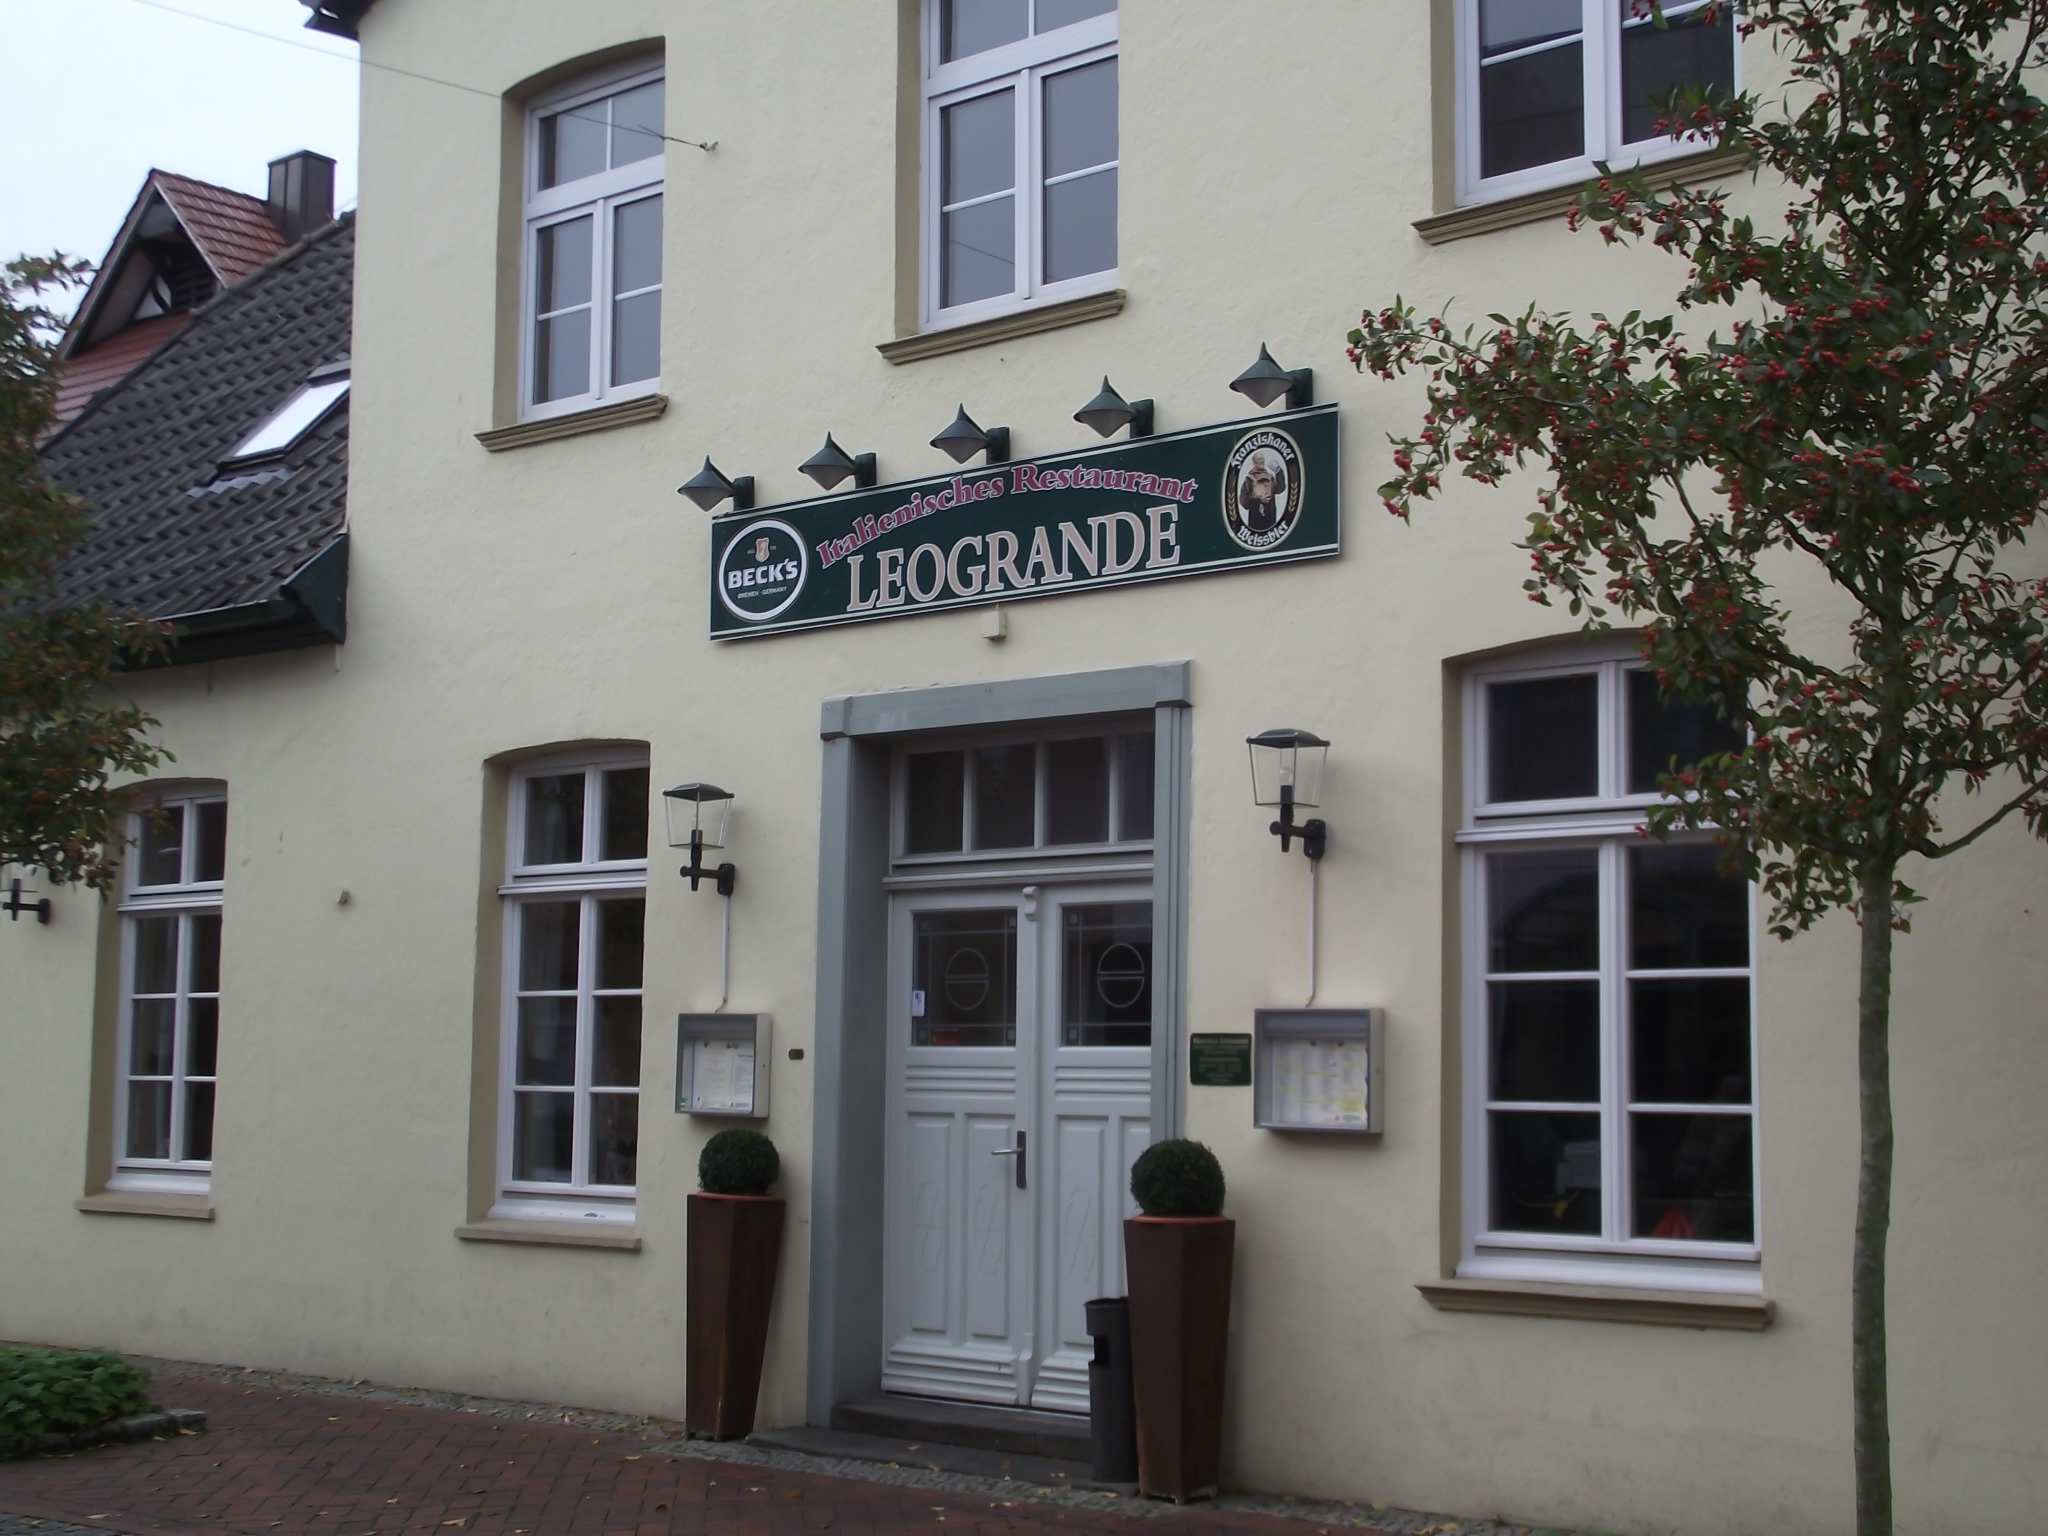 Bild 1 Restaurante Leogrande in Westerstede